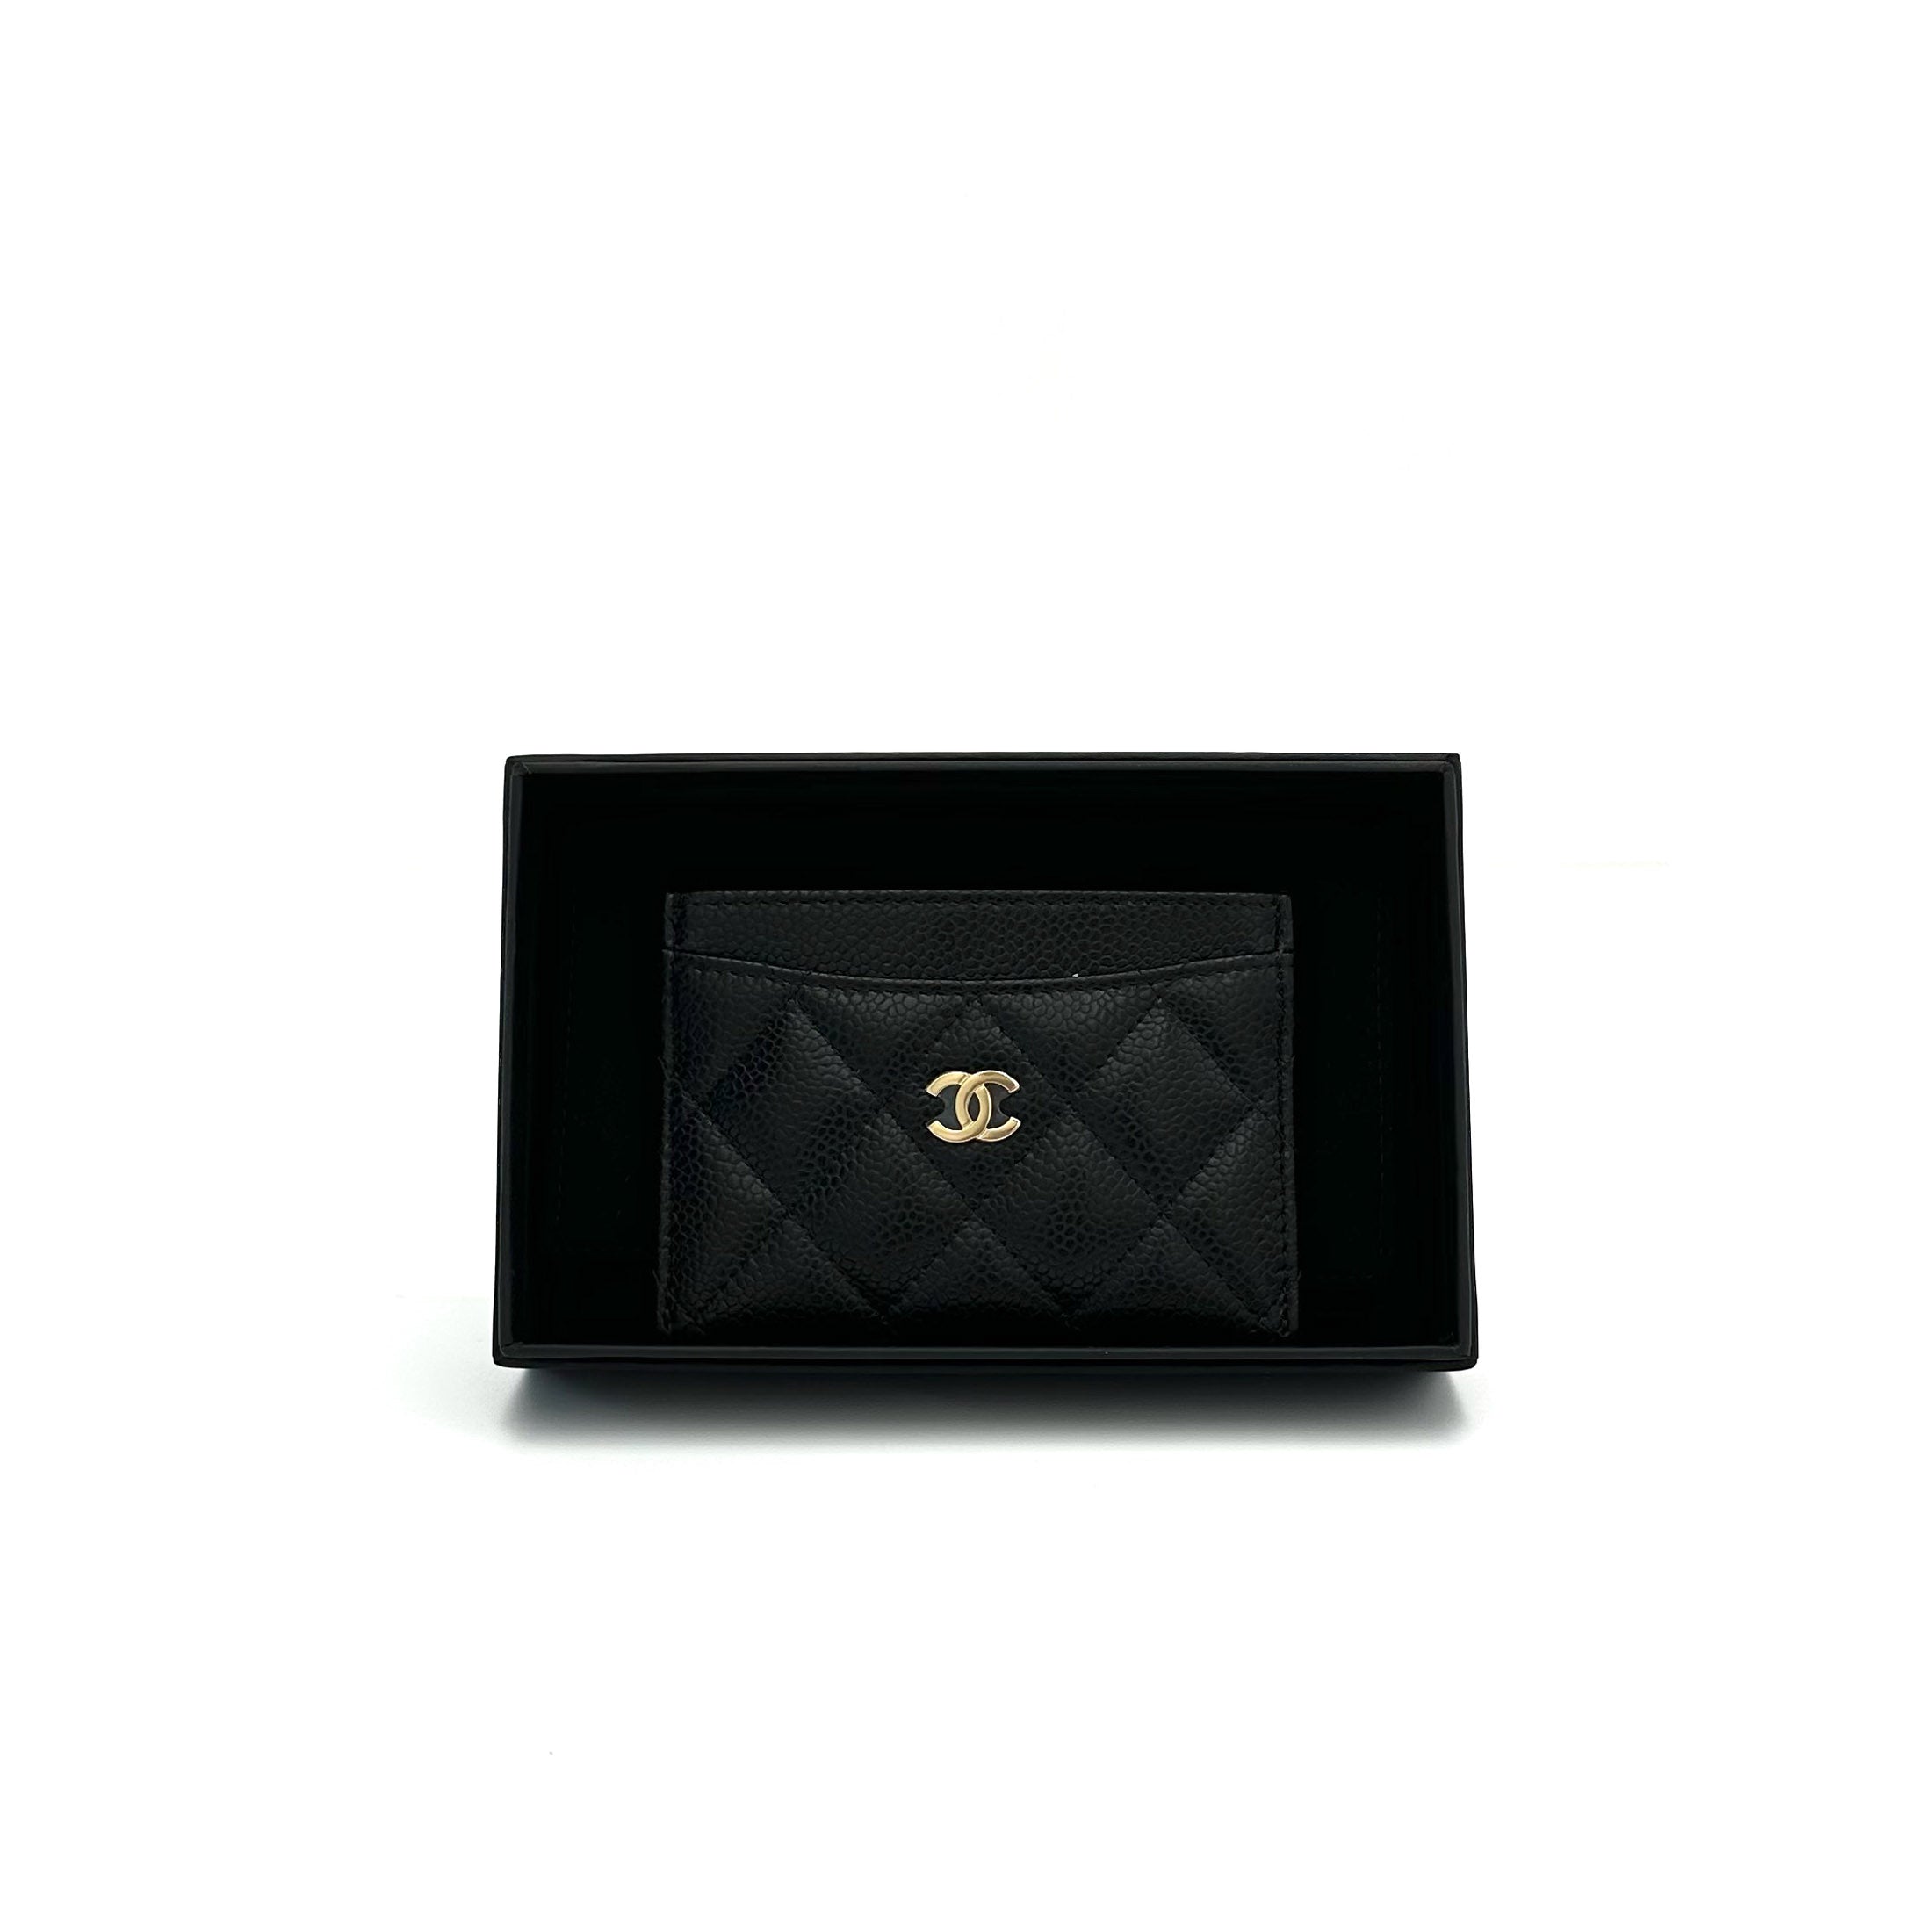 chanel classic card holder caviar gold